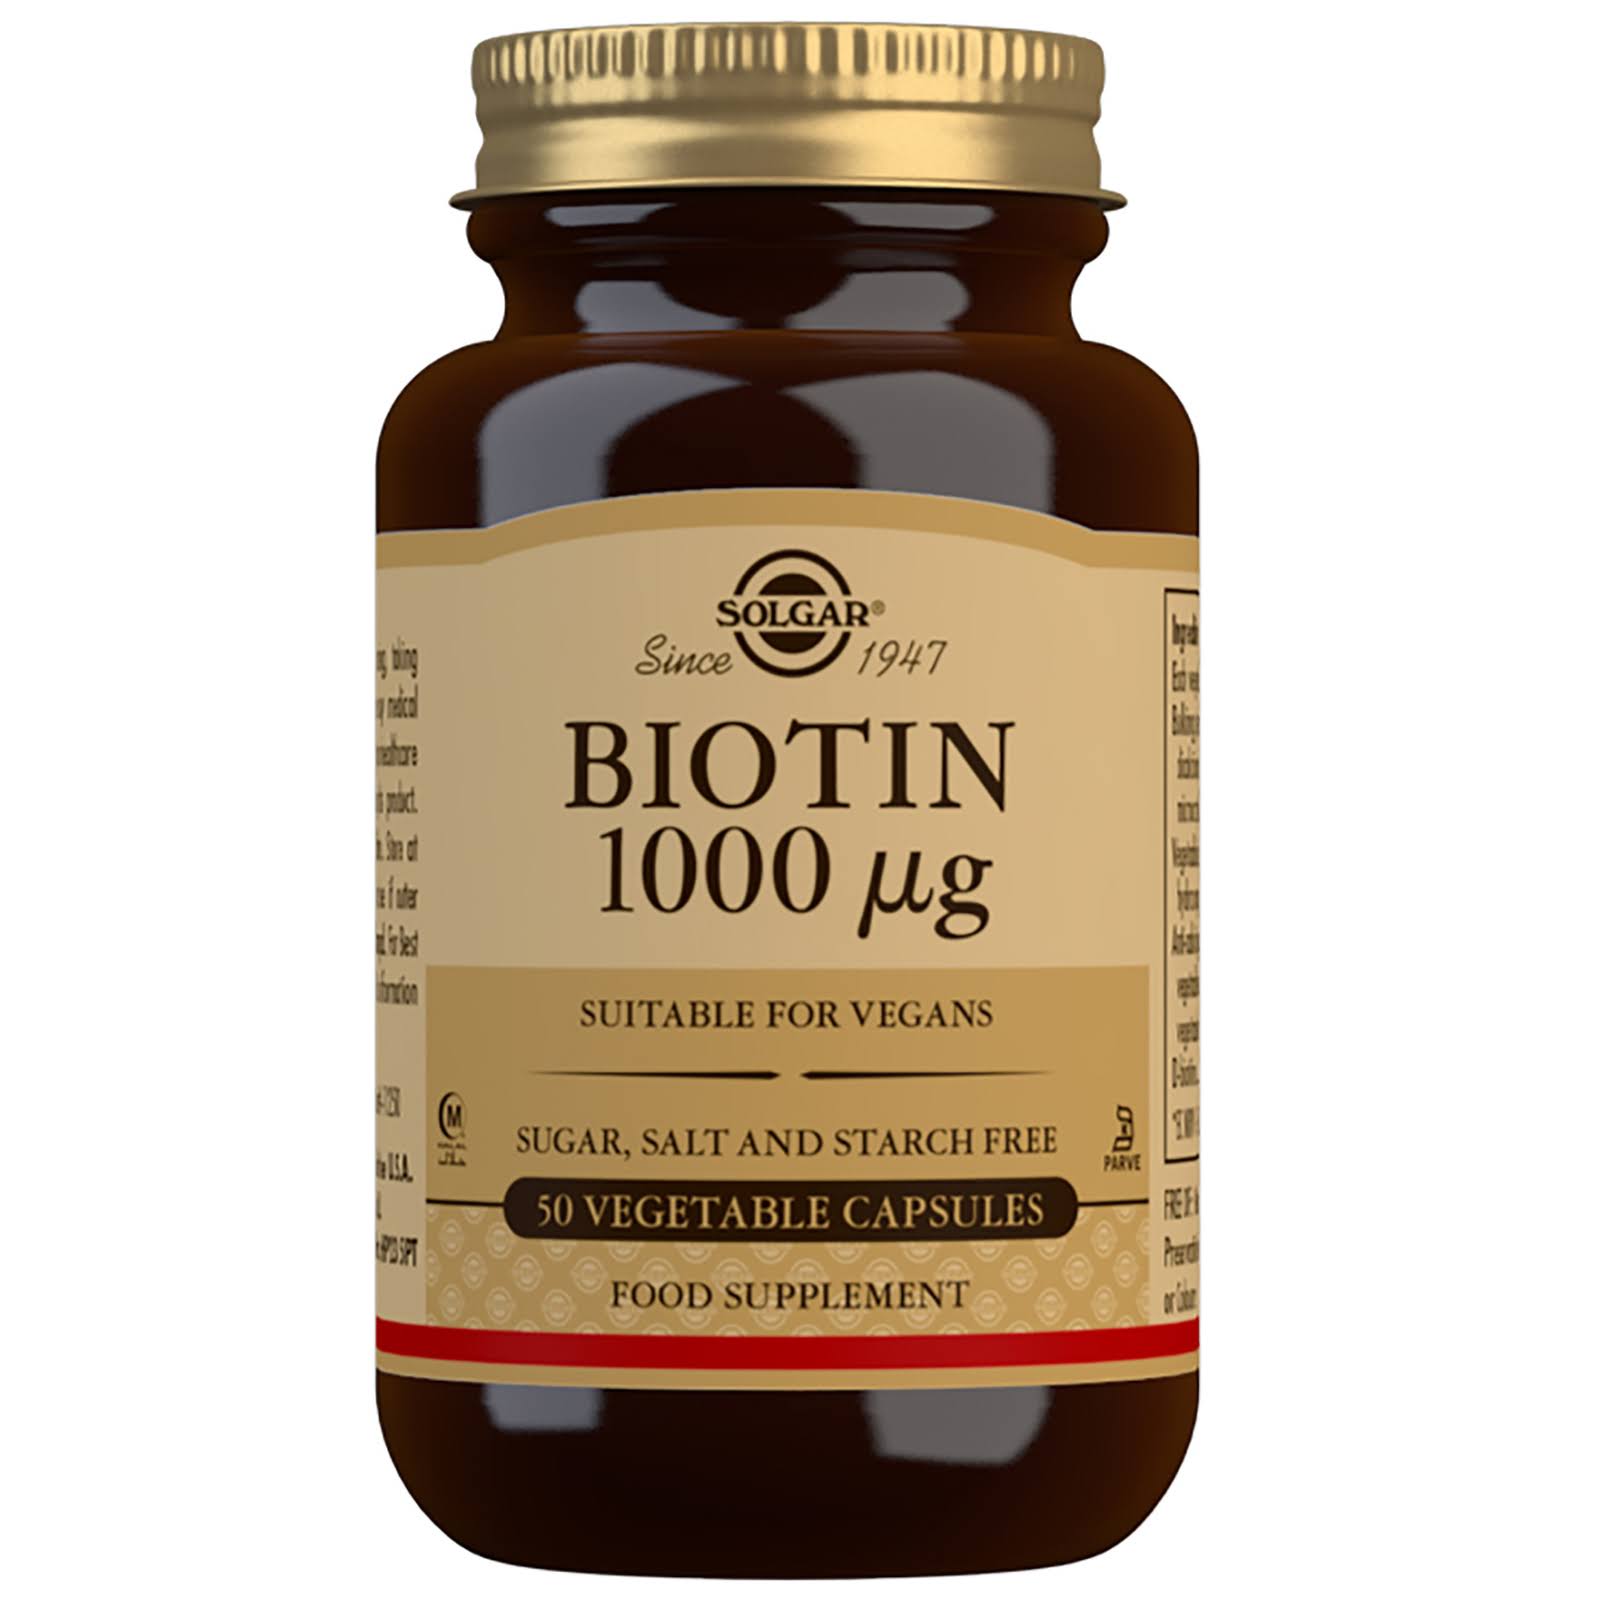 Solgar Biotin Vegetable Capsules - x50